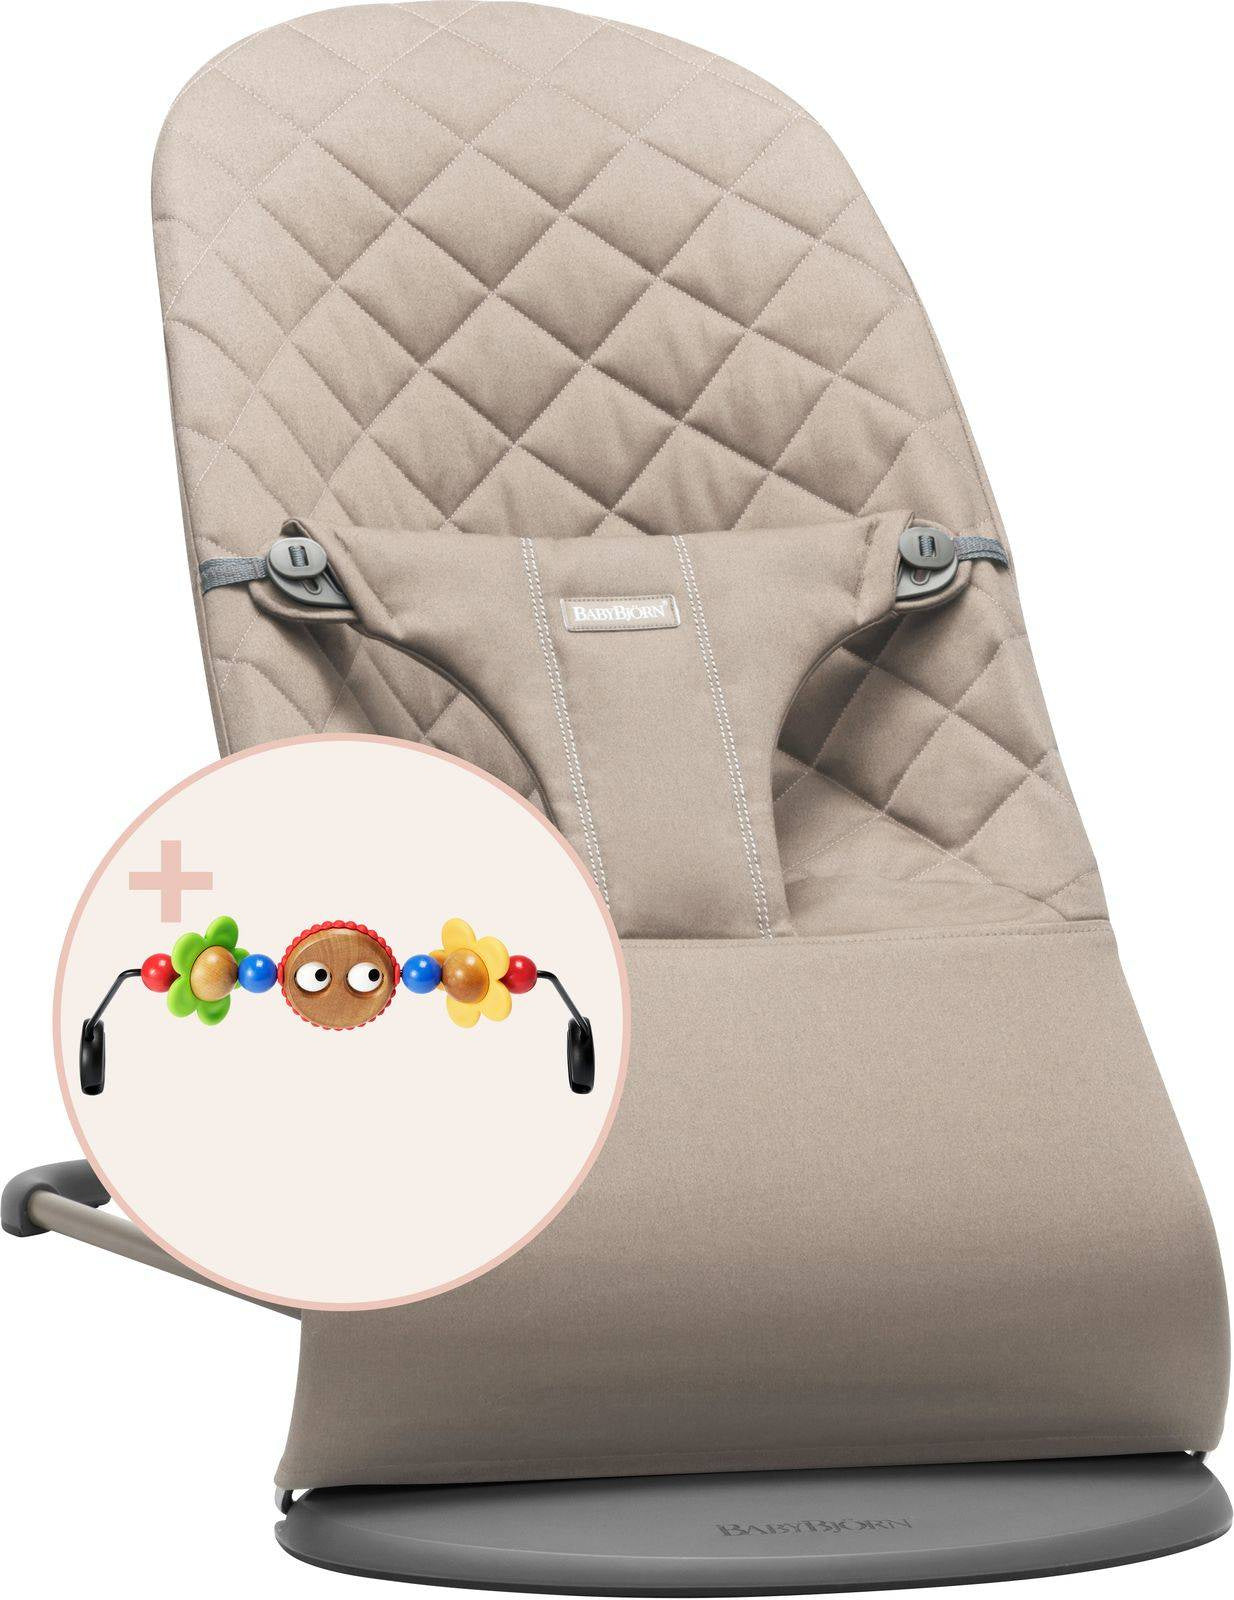 Babybjorn - Bliss gewebtes Deckchair, Sandstyars + GOOLLY Eyes Spielzeug